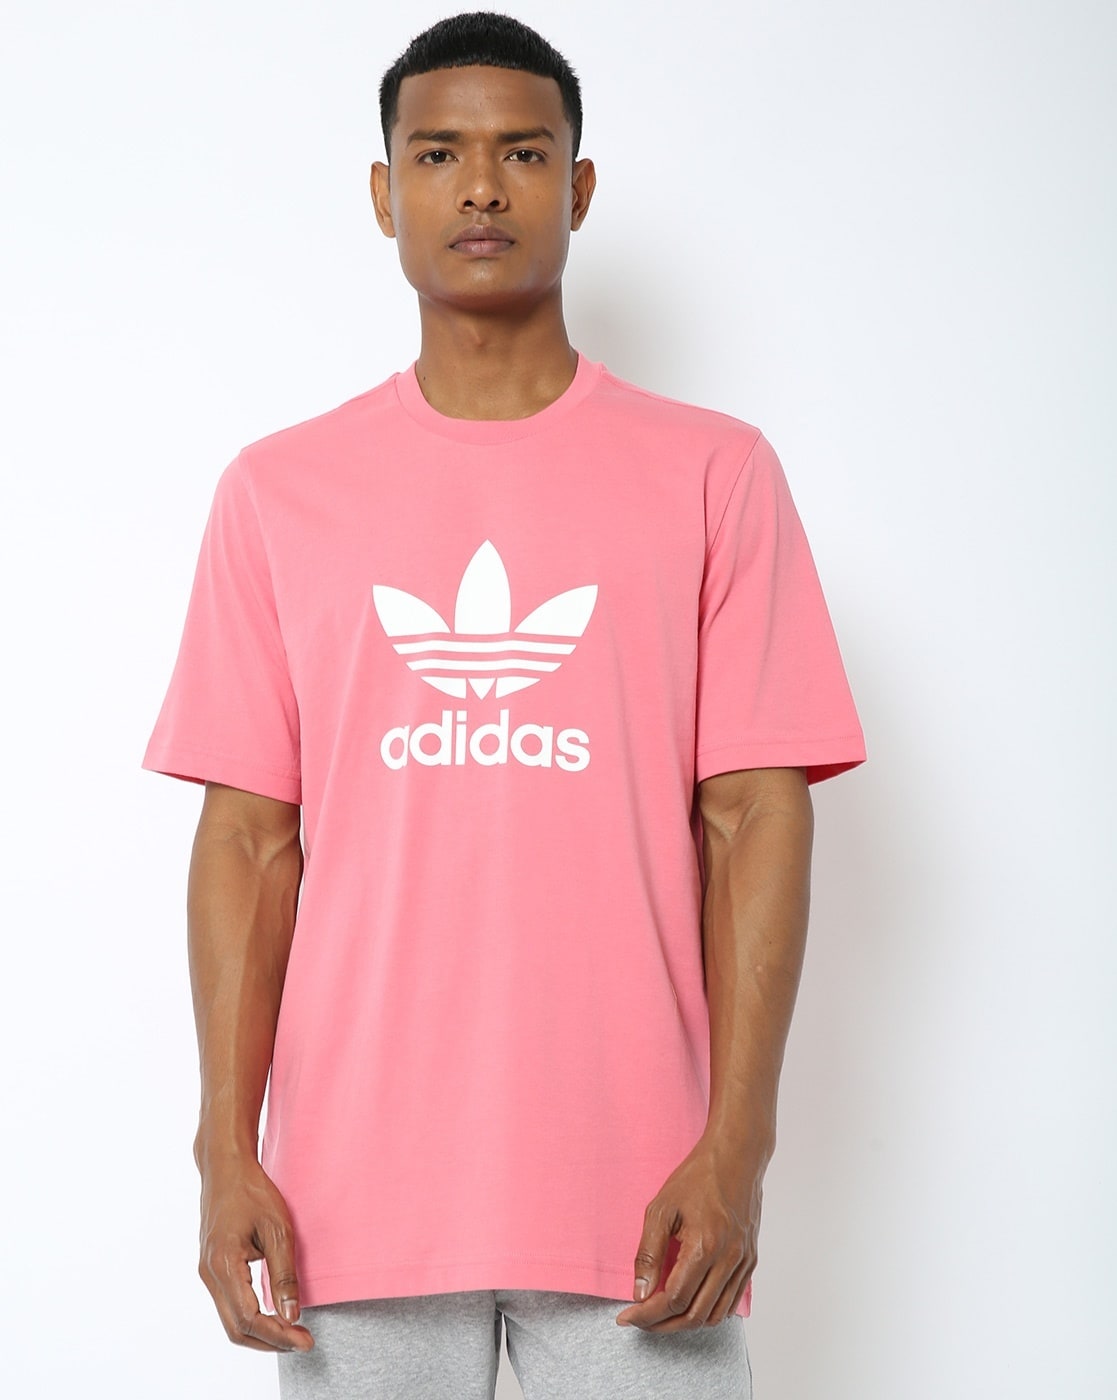 adidas pink tee shirt